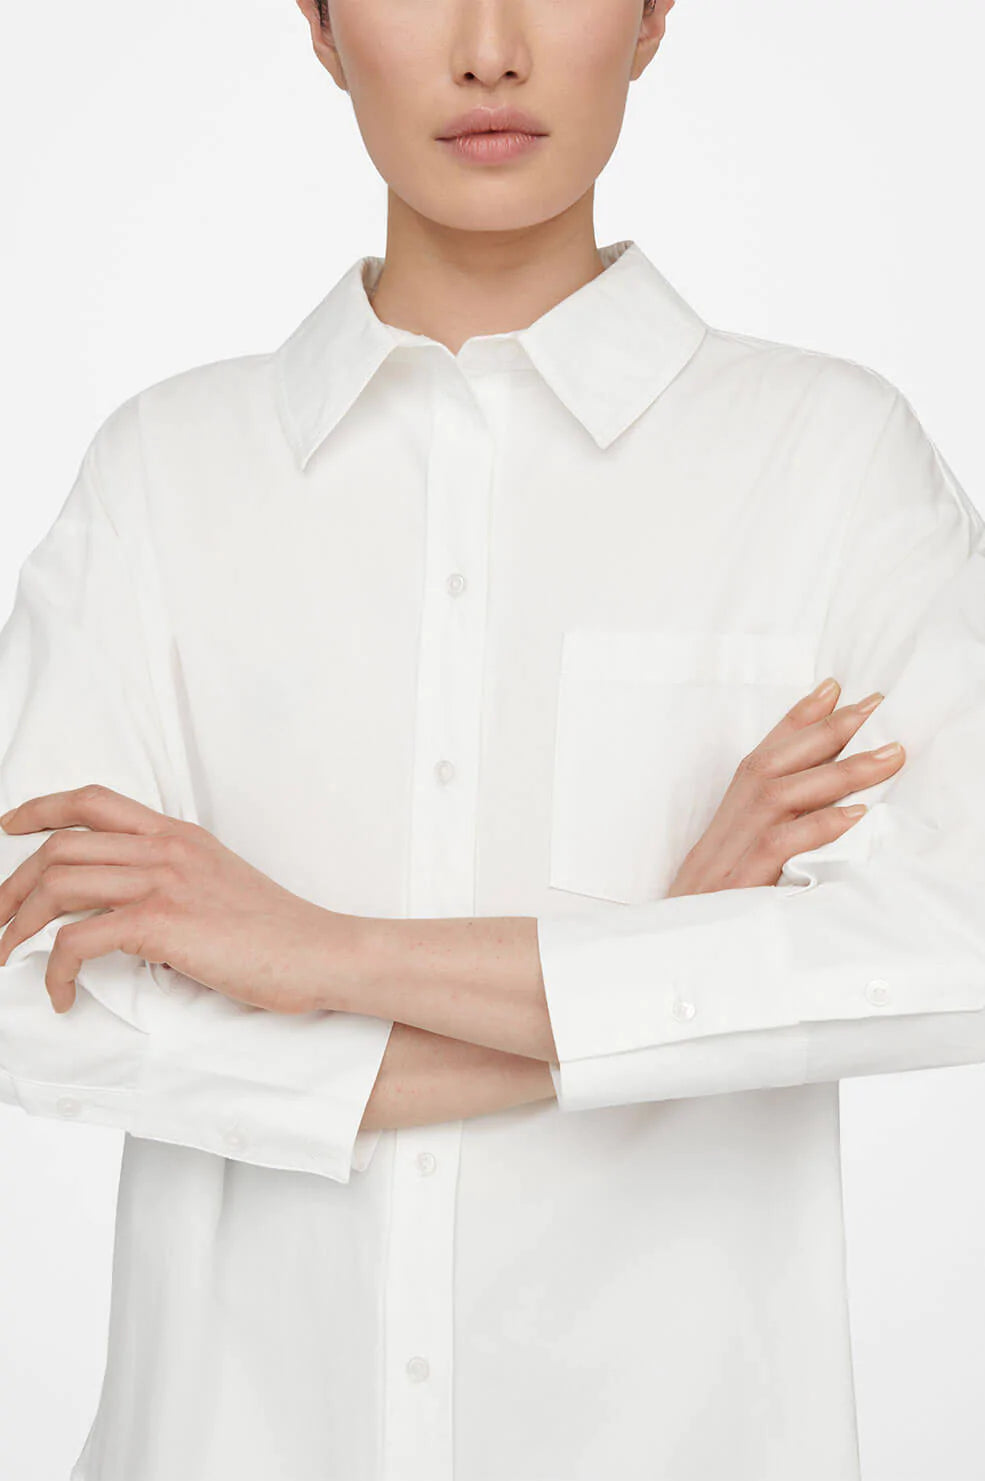 ANINE BING Mika Shirt in White